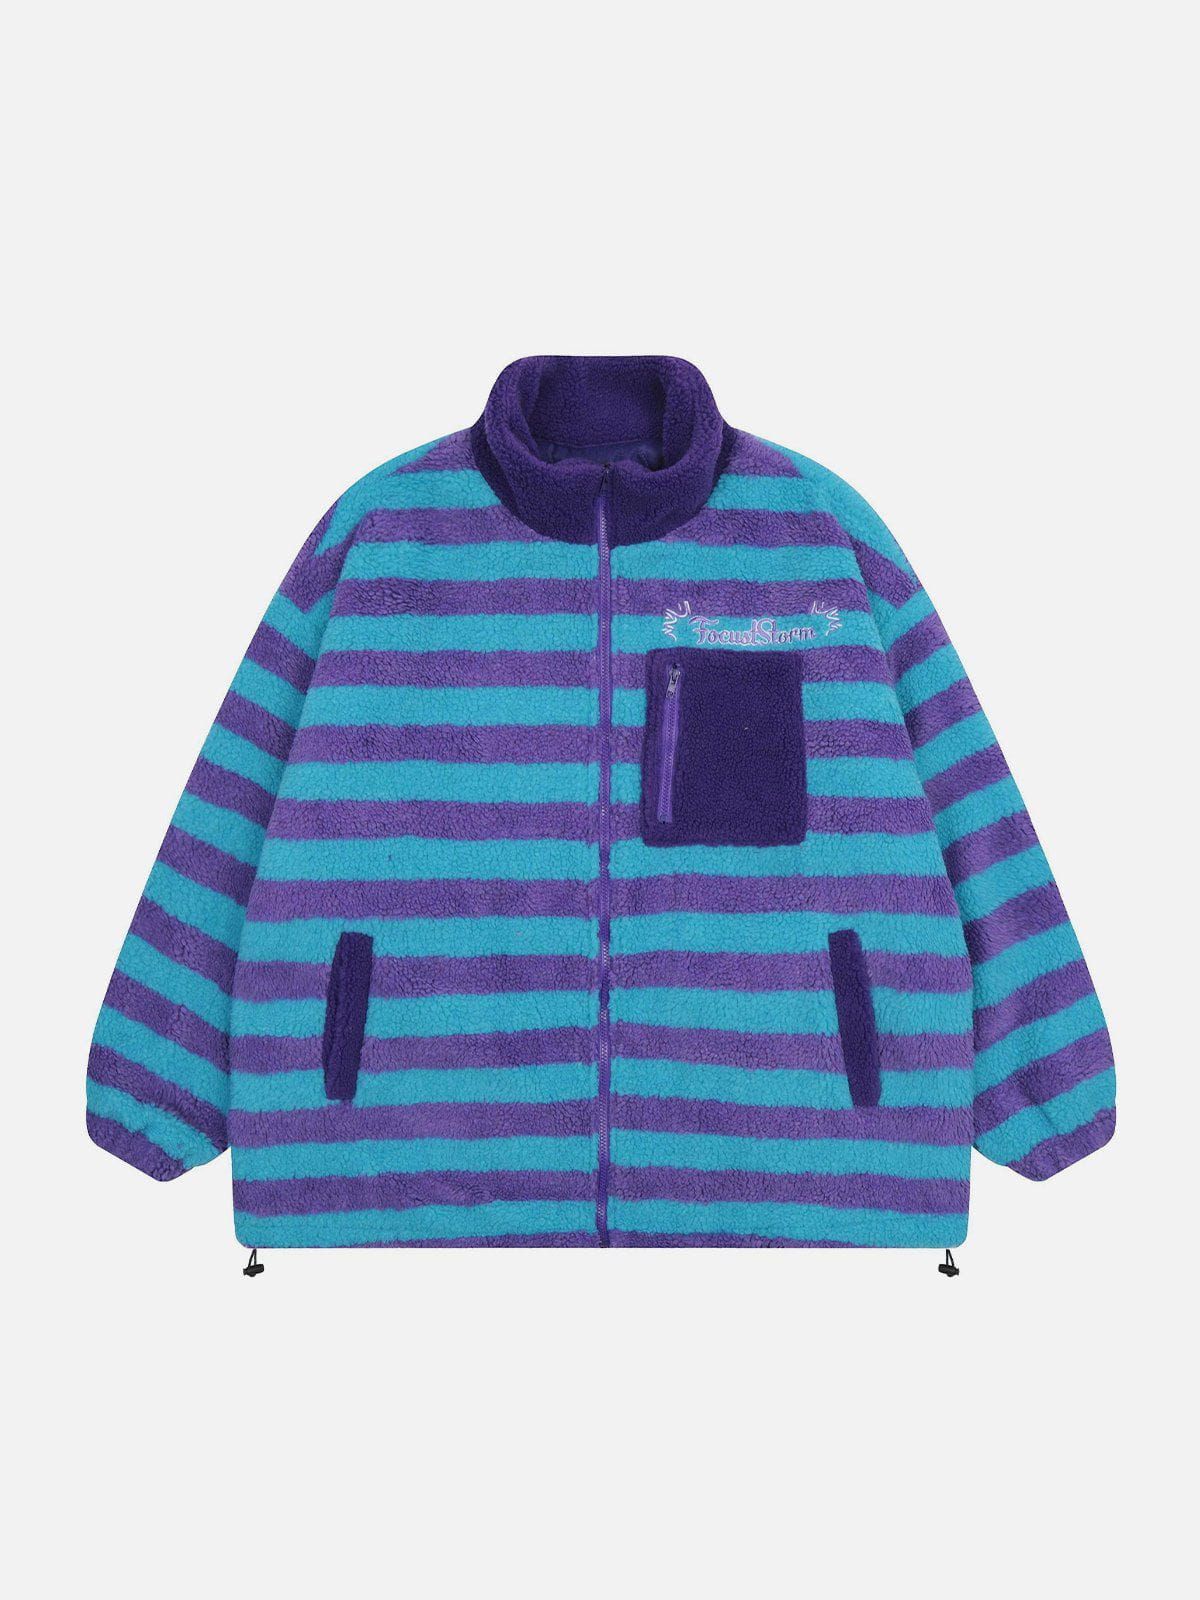 Sneakerland™ - Vintage Alphabet Embroidered Stripe Colorblock Sherpa Coat